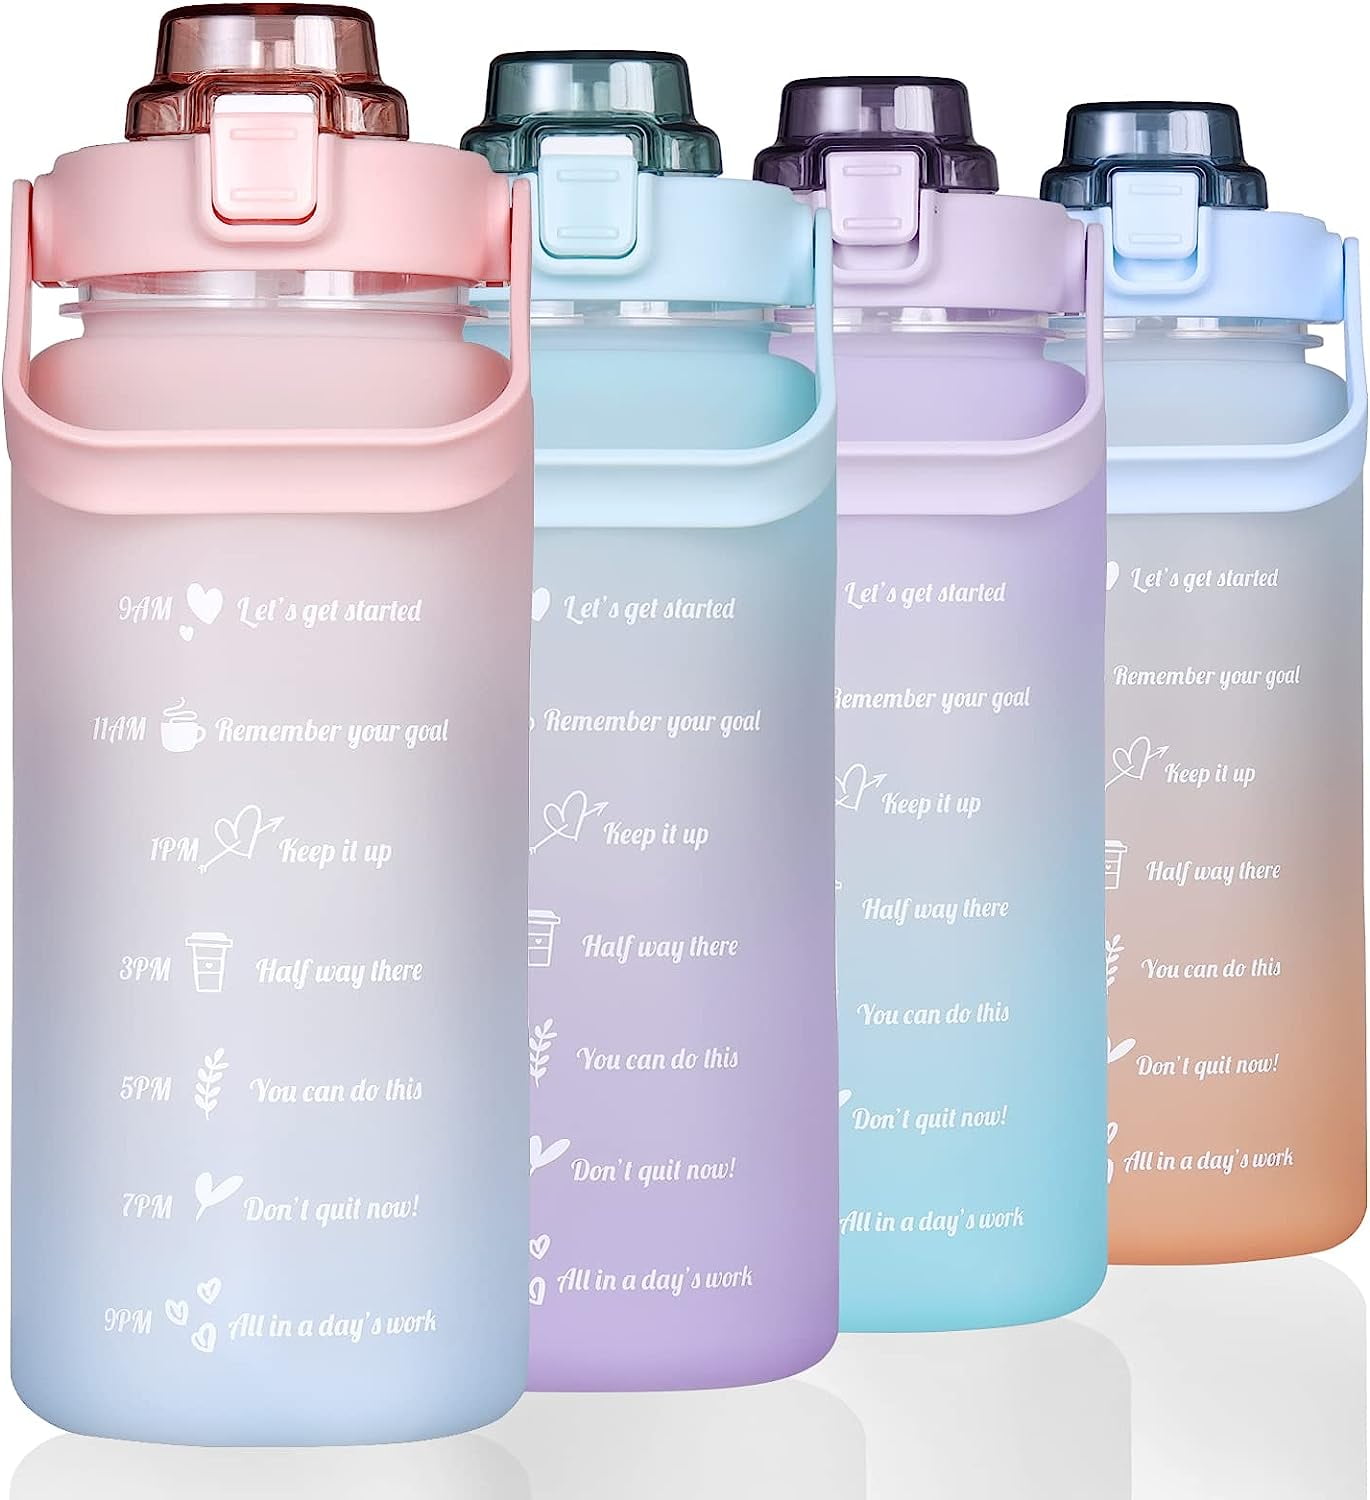 Stata Gift Shop  Stata water bottle